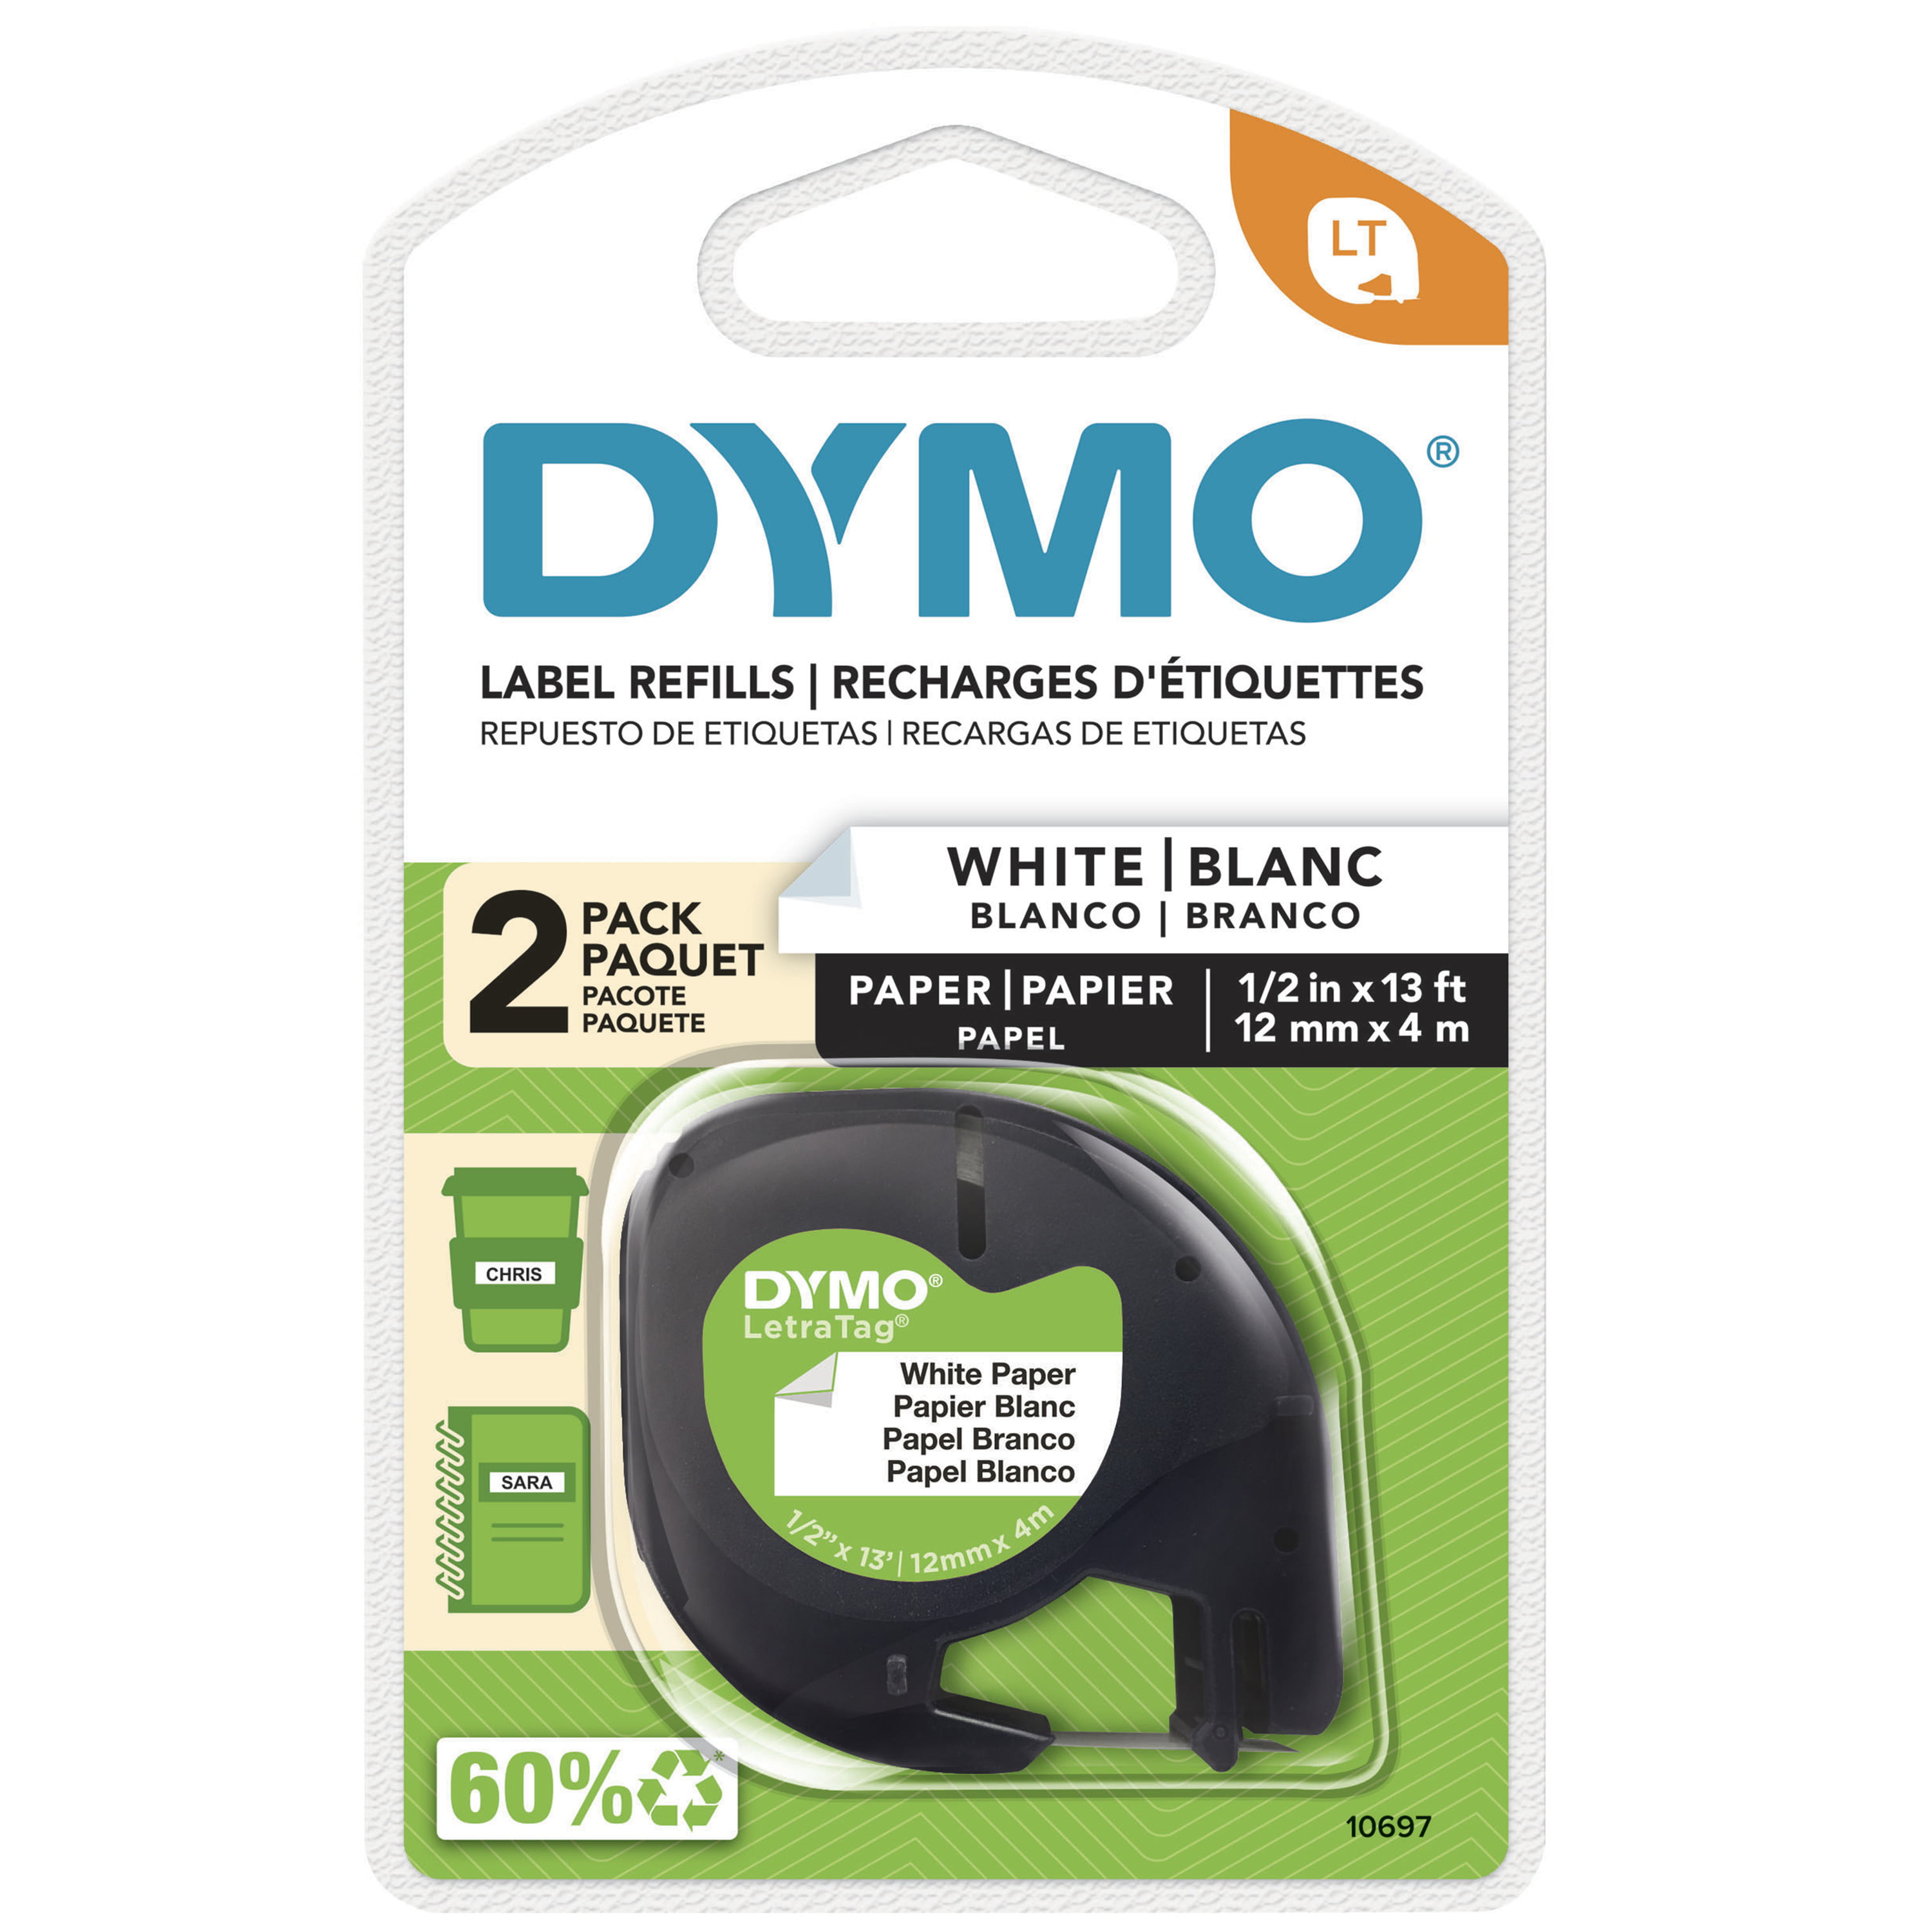 LT 91330 Compatible Dymo Letratag Refills Paper Label Maker Tape White 12mm 5PK 